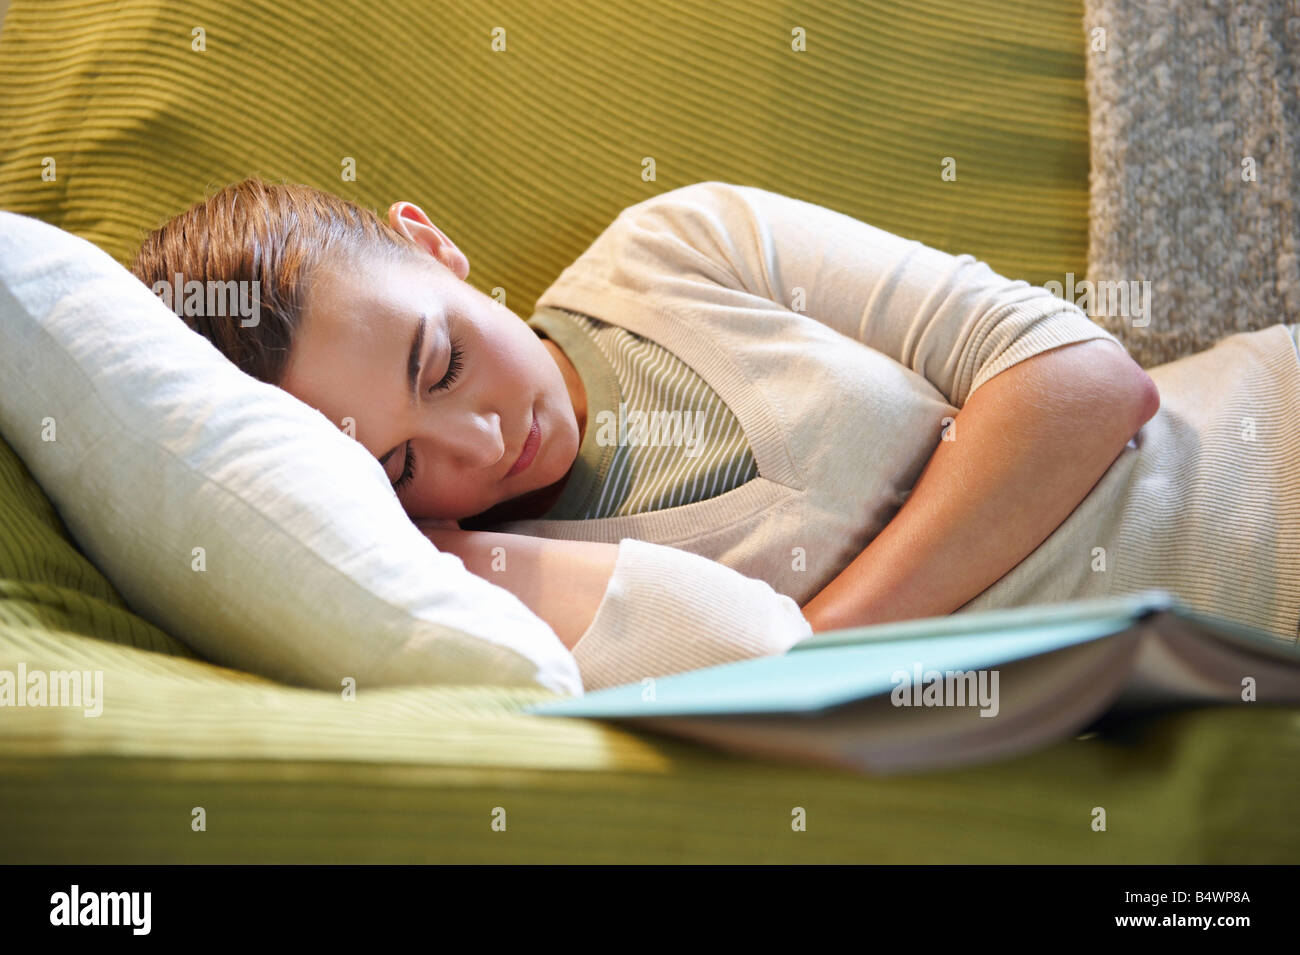 Young woman lying on couch, avec réserve Banque D'Images